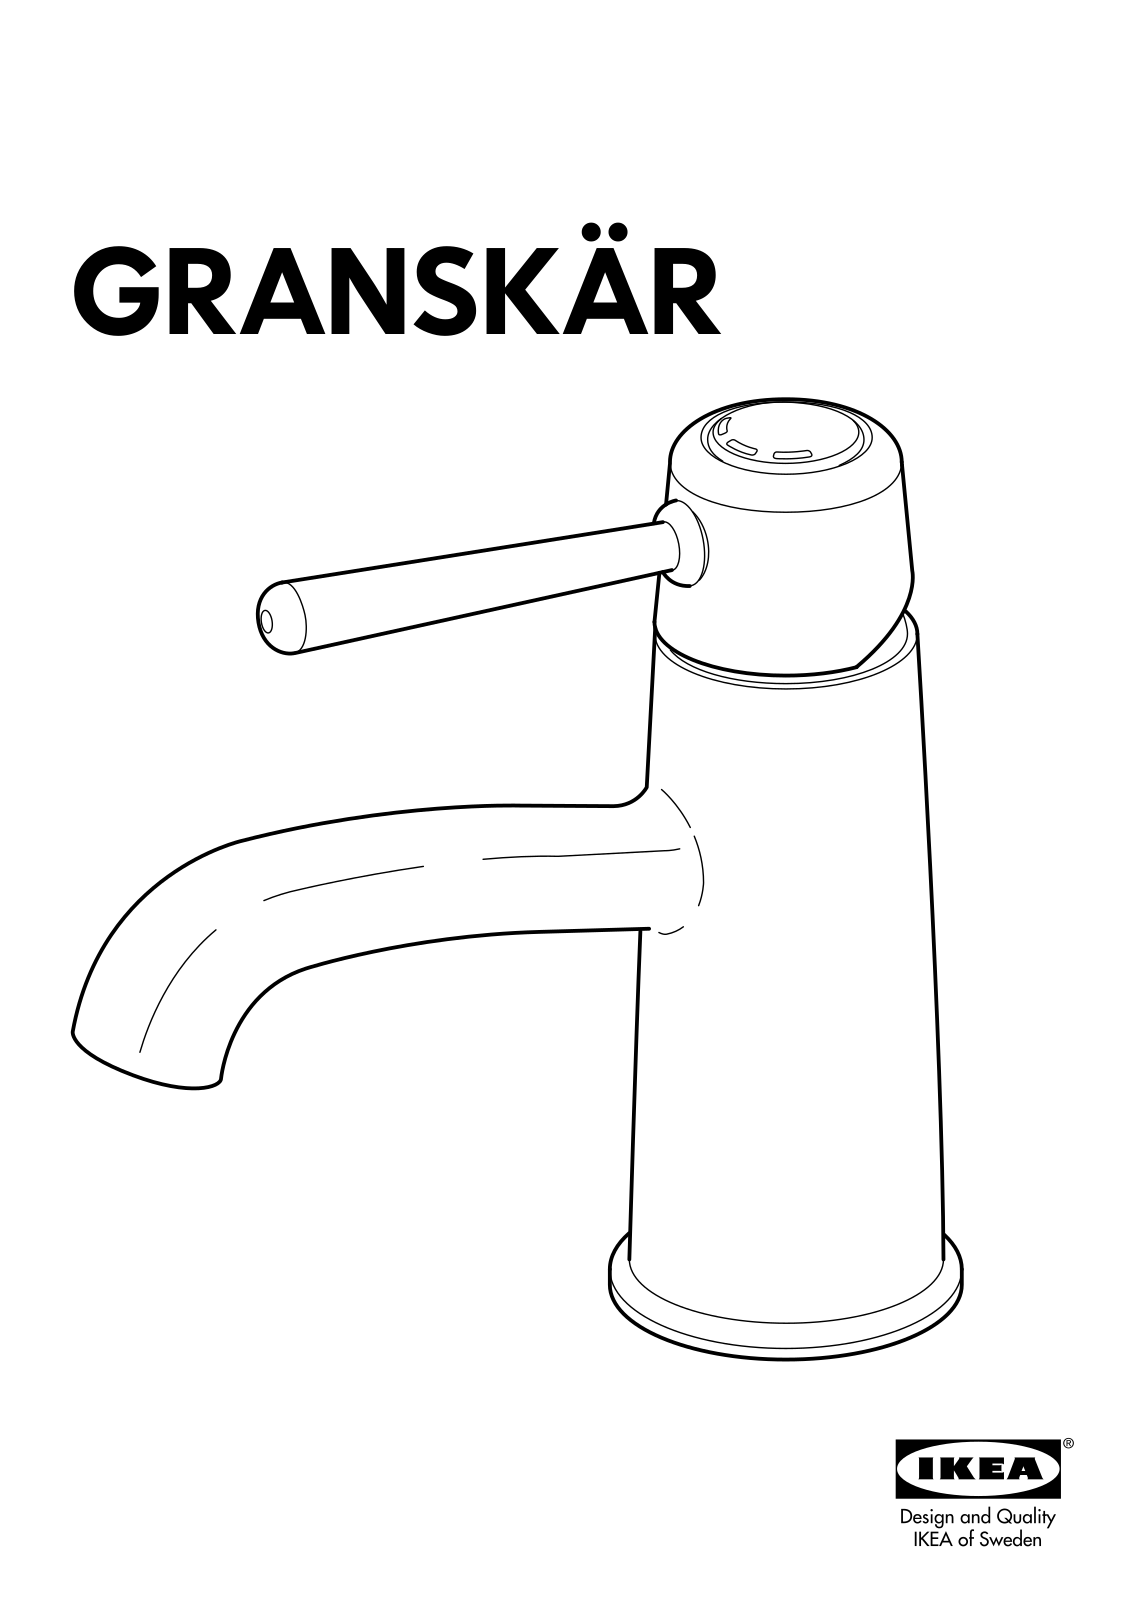 IKEA GRANSKÄR Bath faucet User Manual